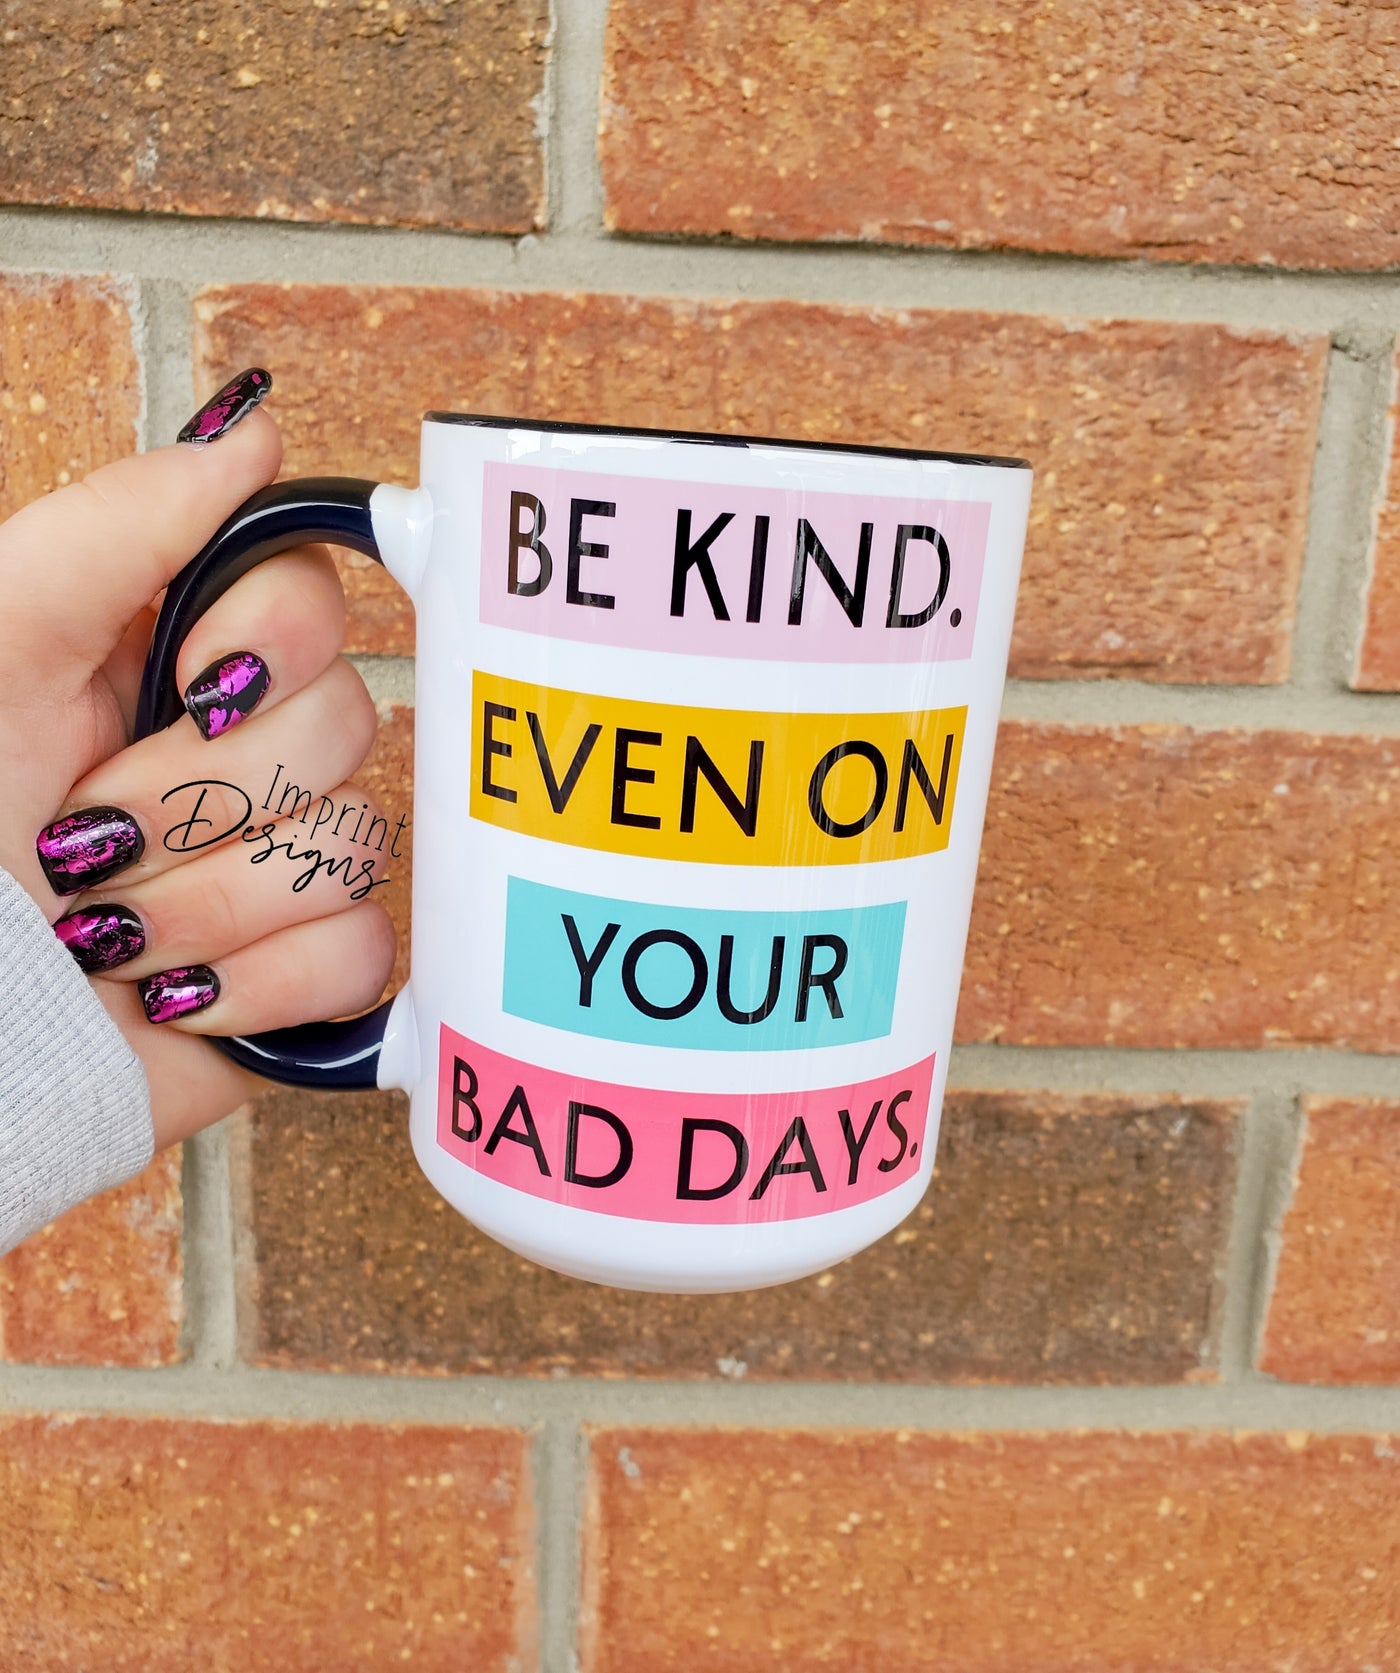 Be kind on bad days